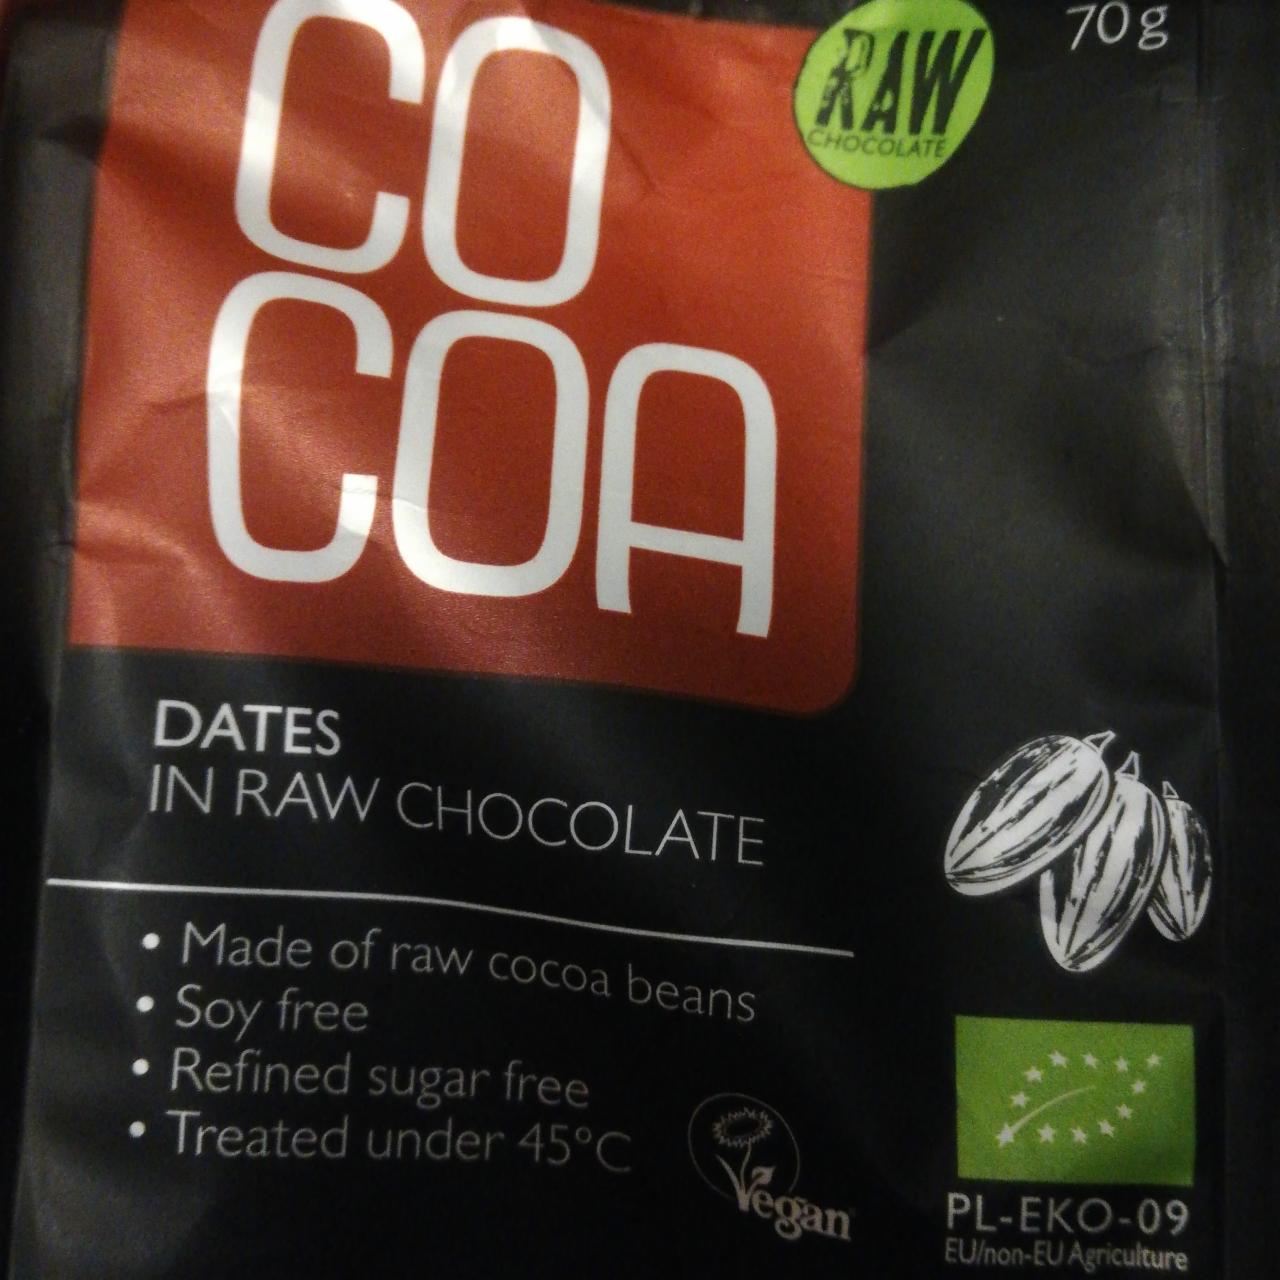 Zdjęcia - Dates in raw chocolate CO COA